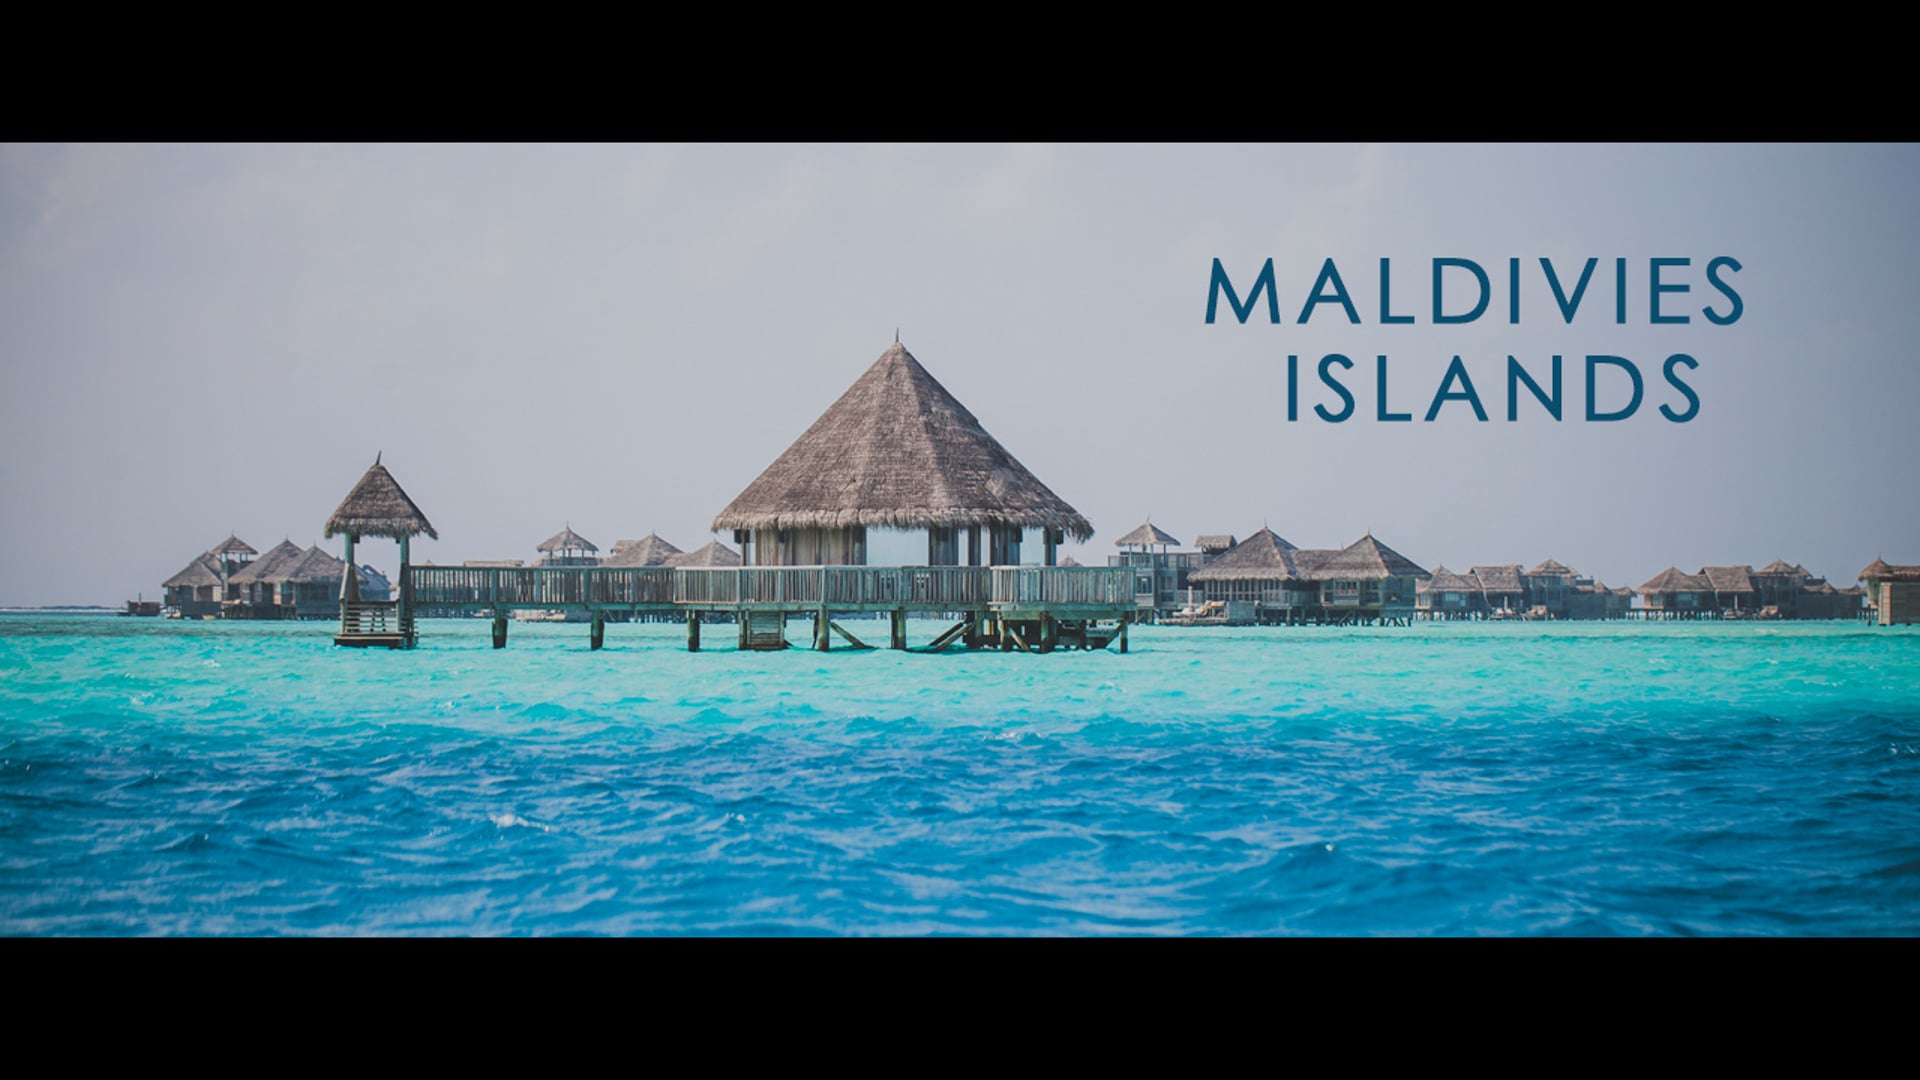 My yacht trip to Maldives islands. March 2014.